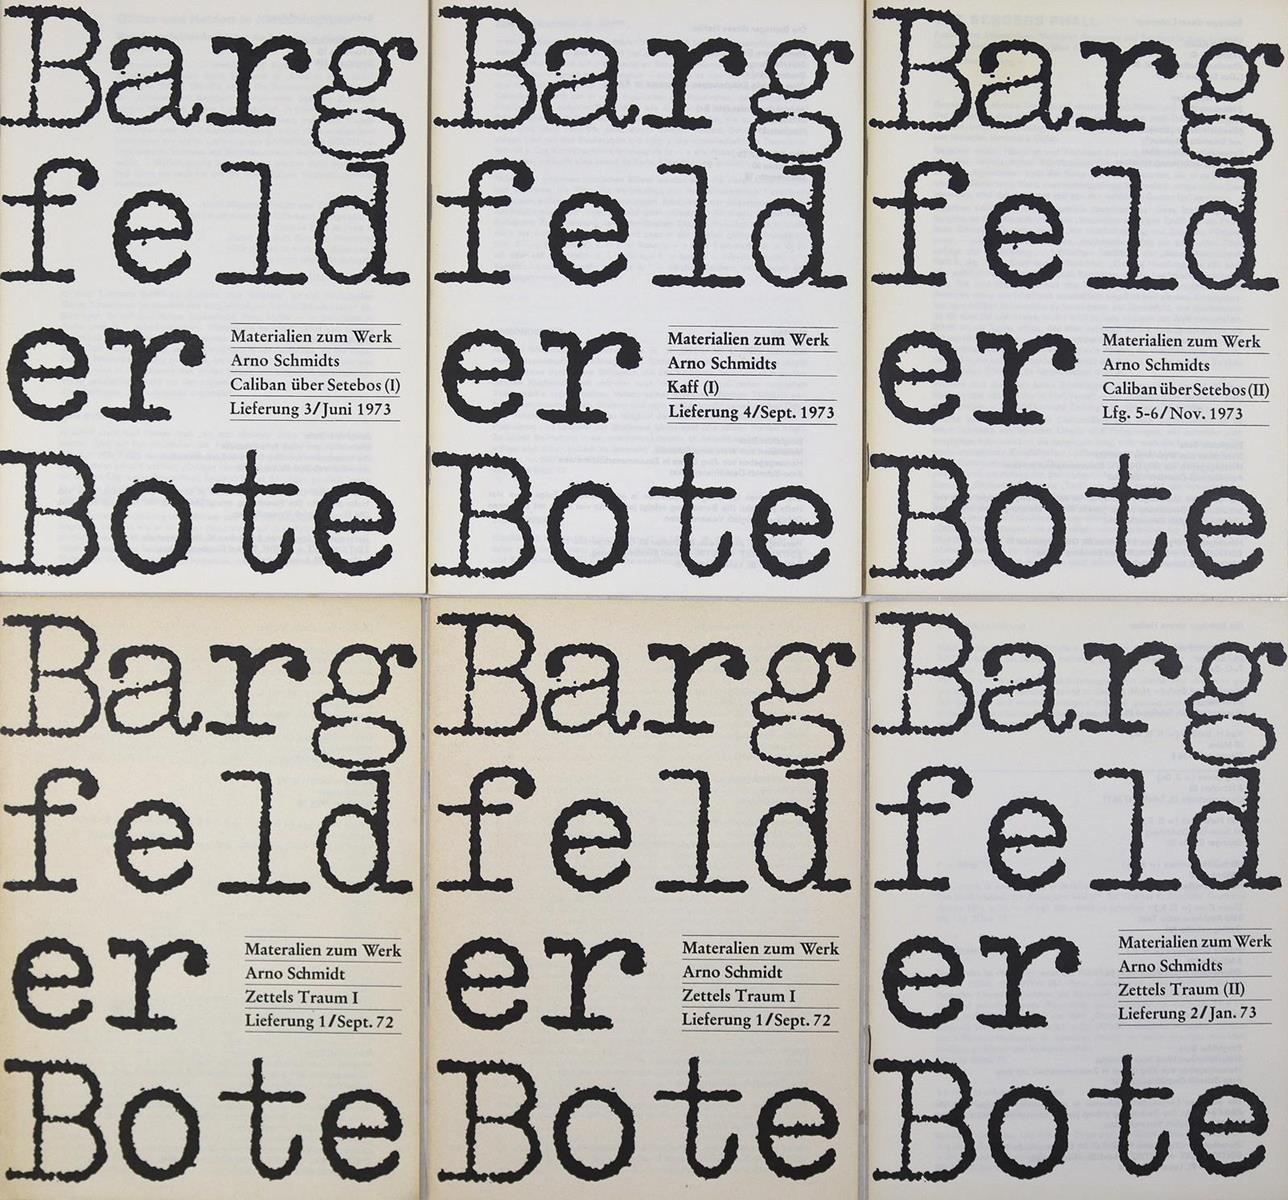 Bargfelder Bote. | Bild Nr.1